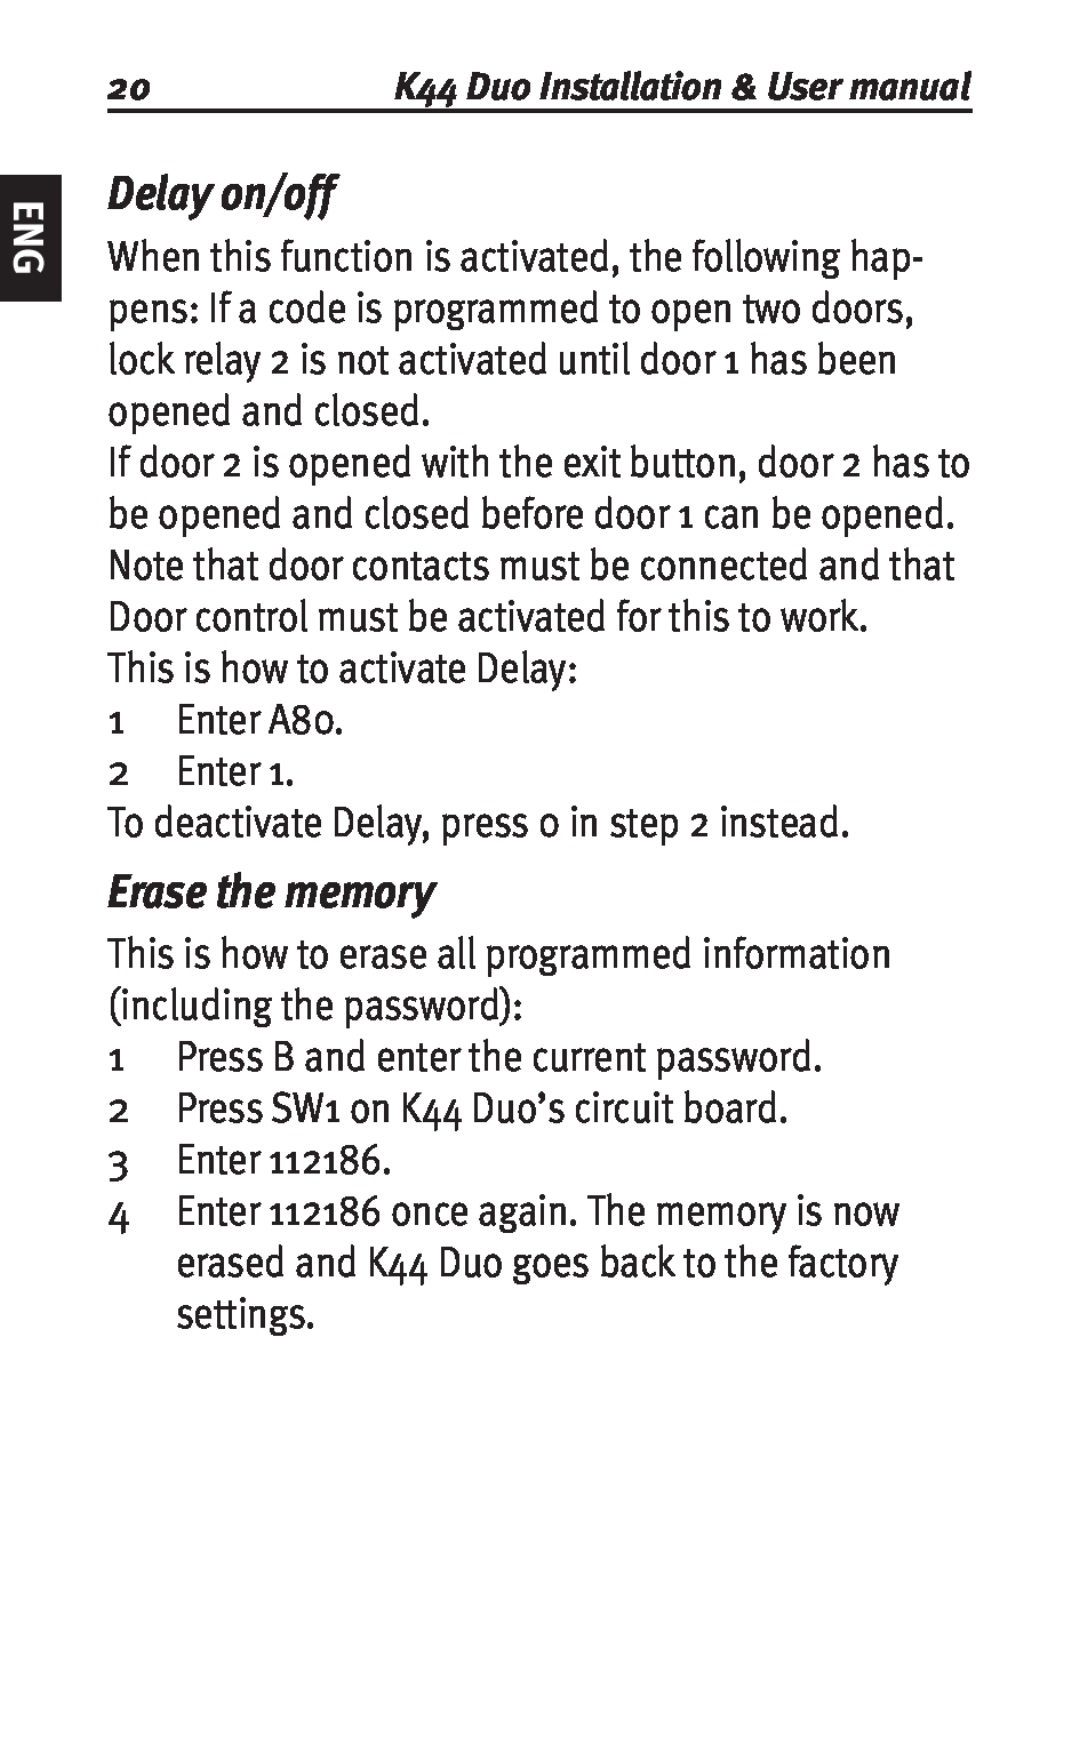 Siemens K44 user manual Delay on/off, Erase the memory 